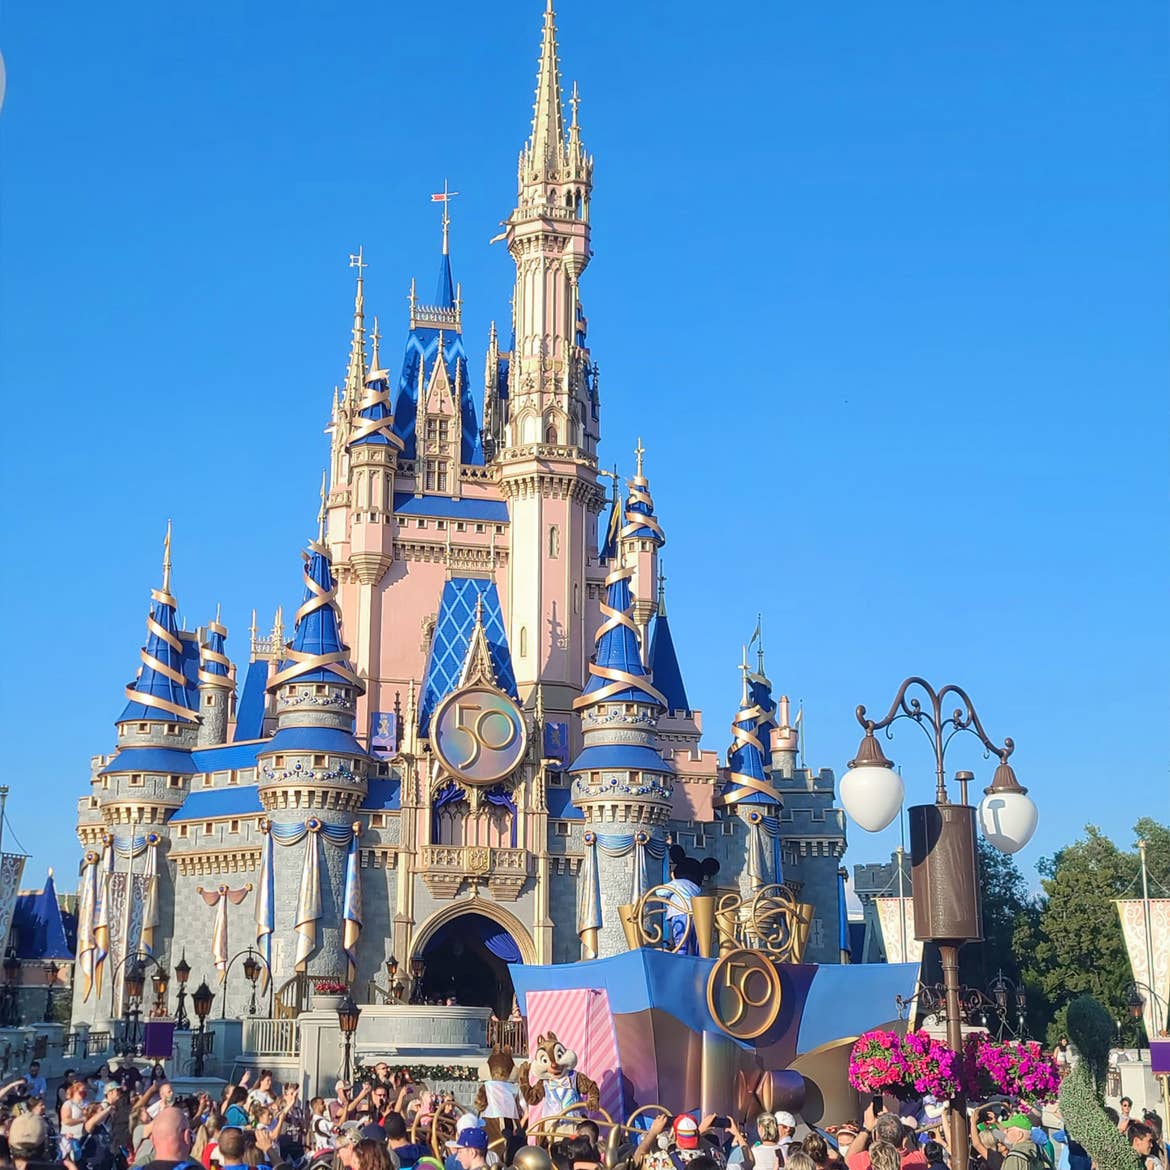 Cinderella's Castle in the Magic Kingdom at Walt Disney World.